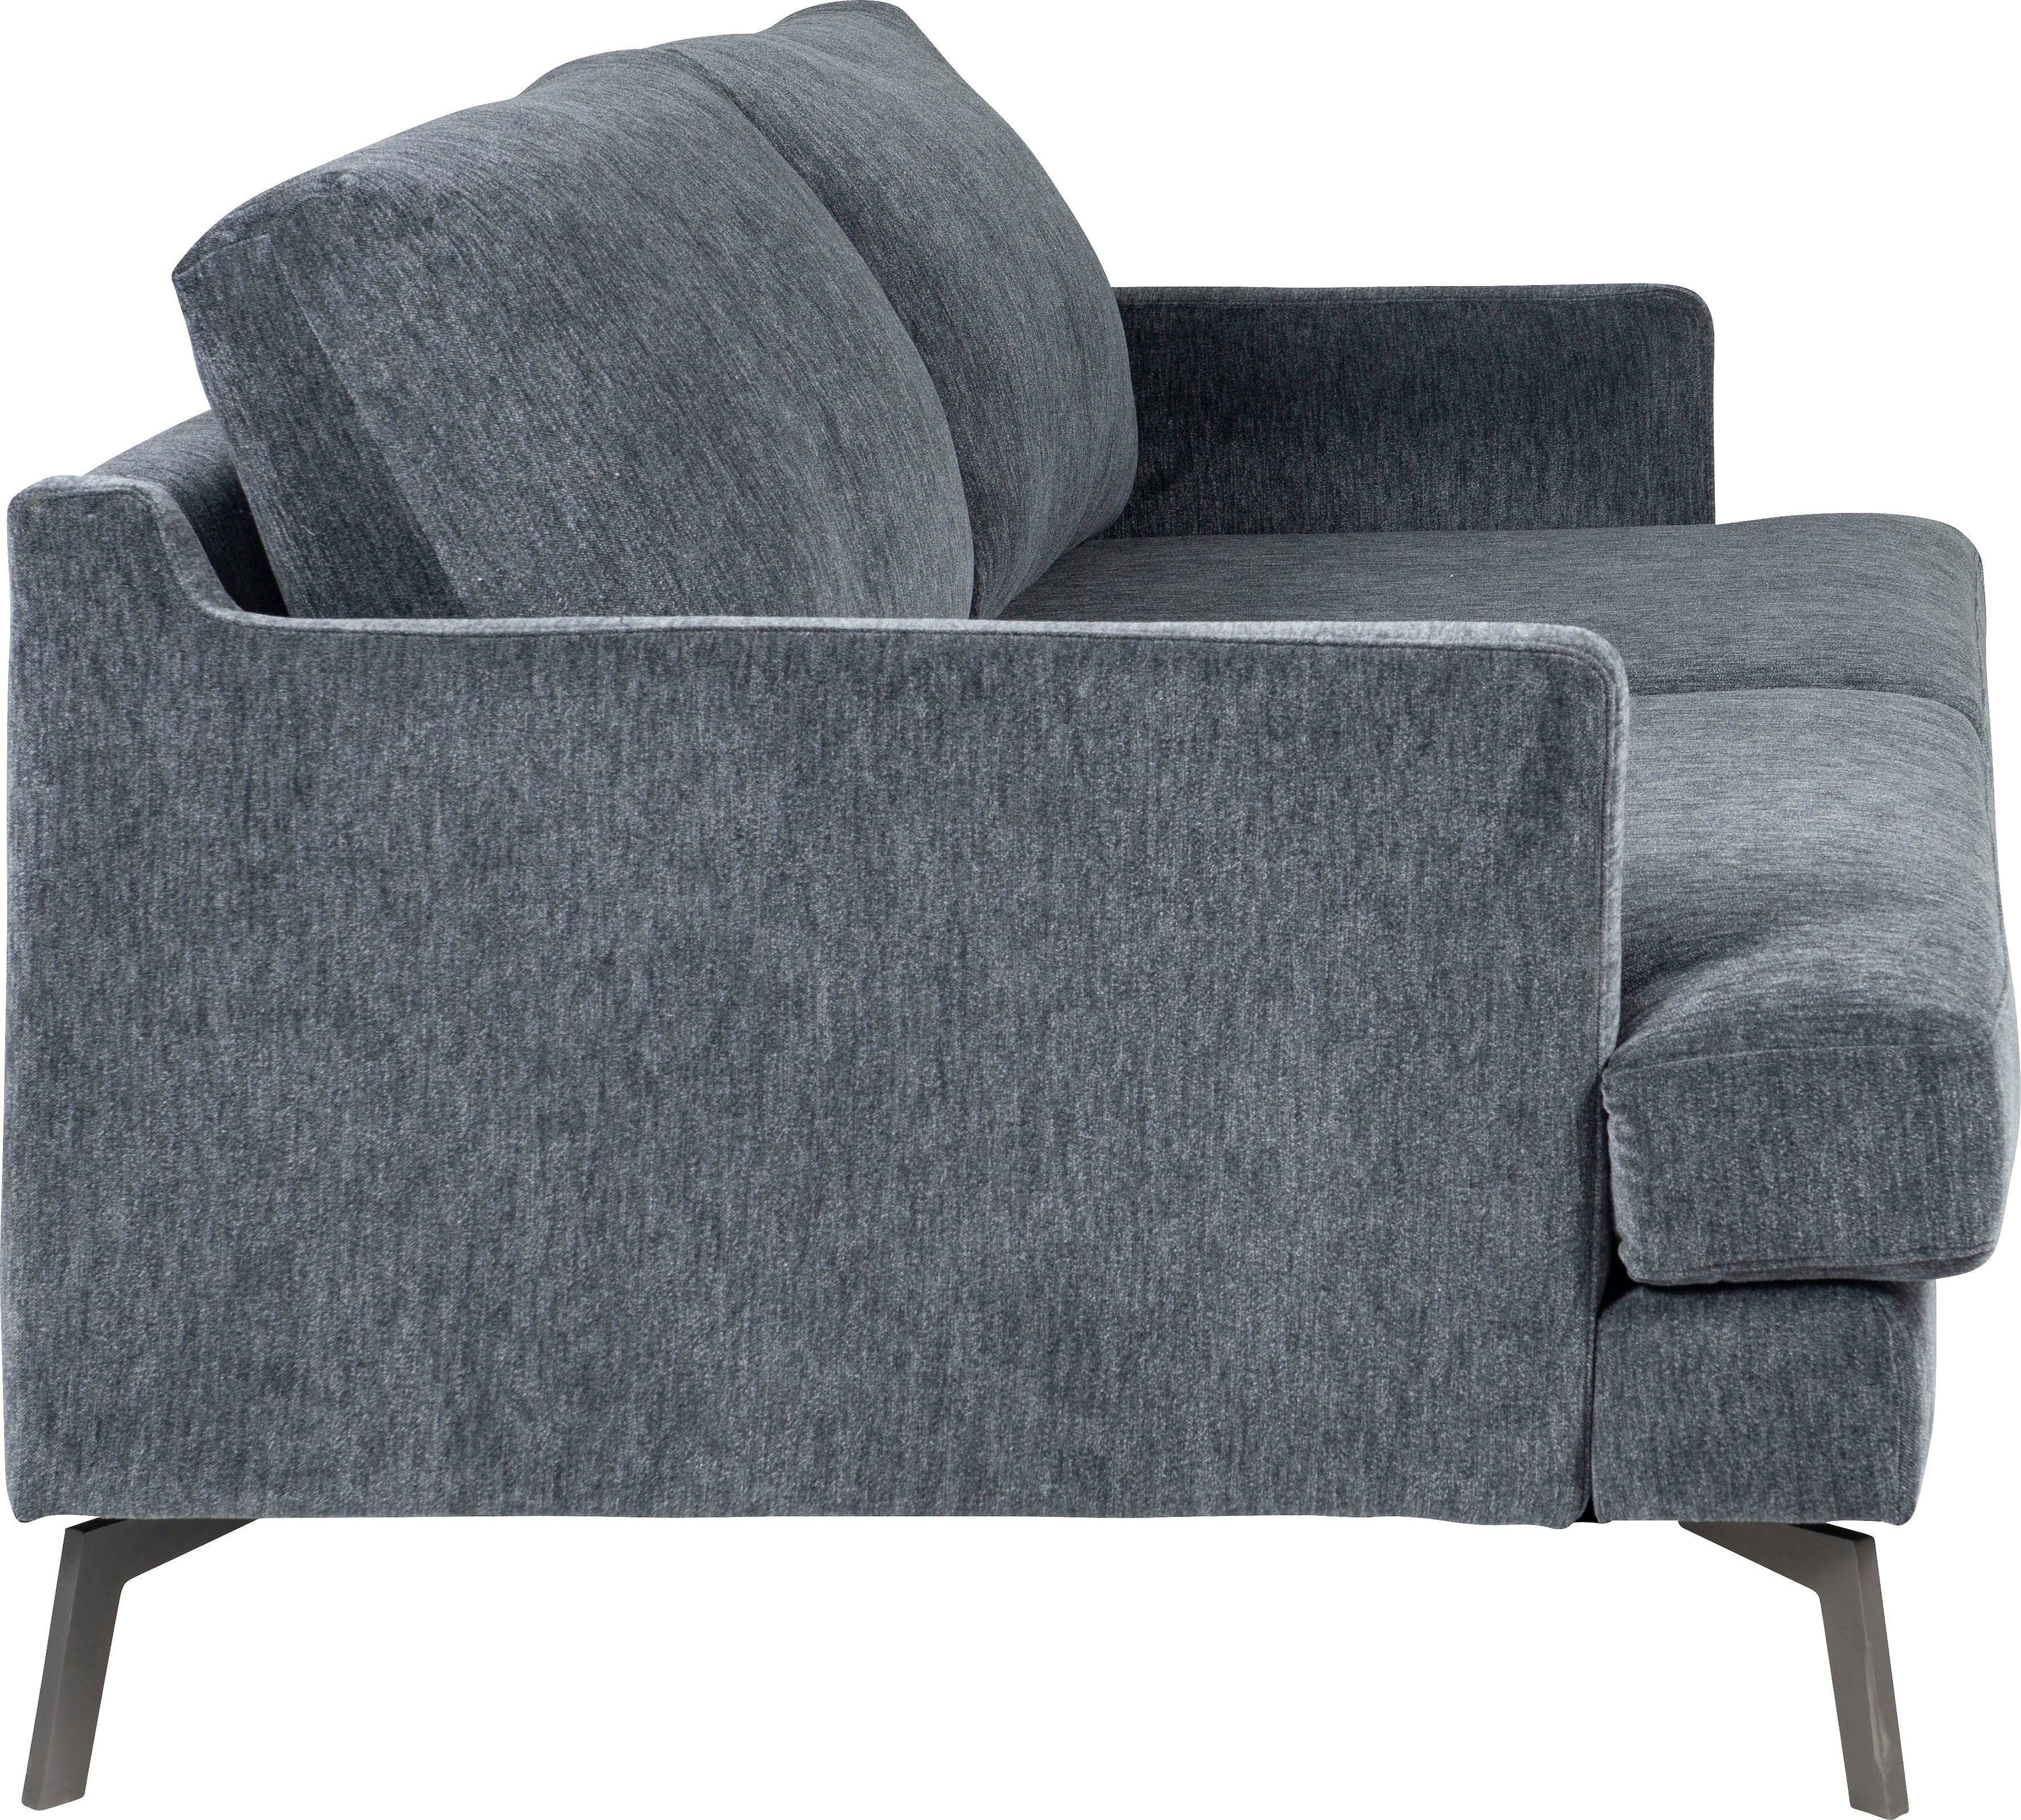 Klassiker Saga, furninova Design grey skandinavischen ein im 3-Sitzer